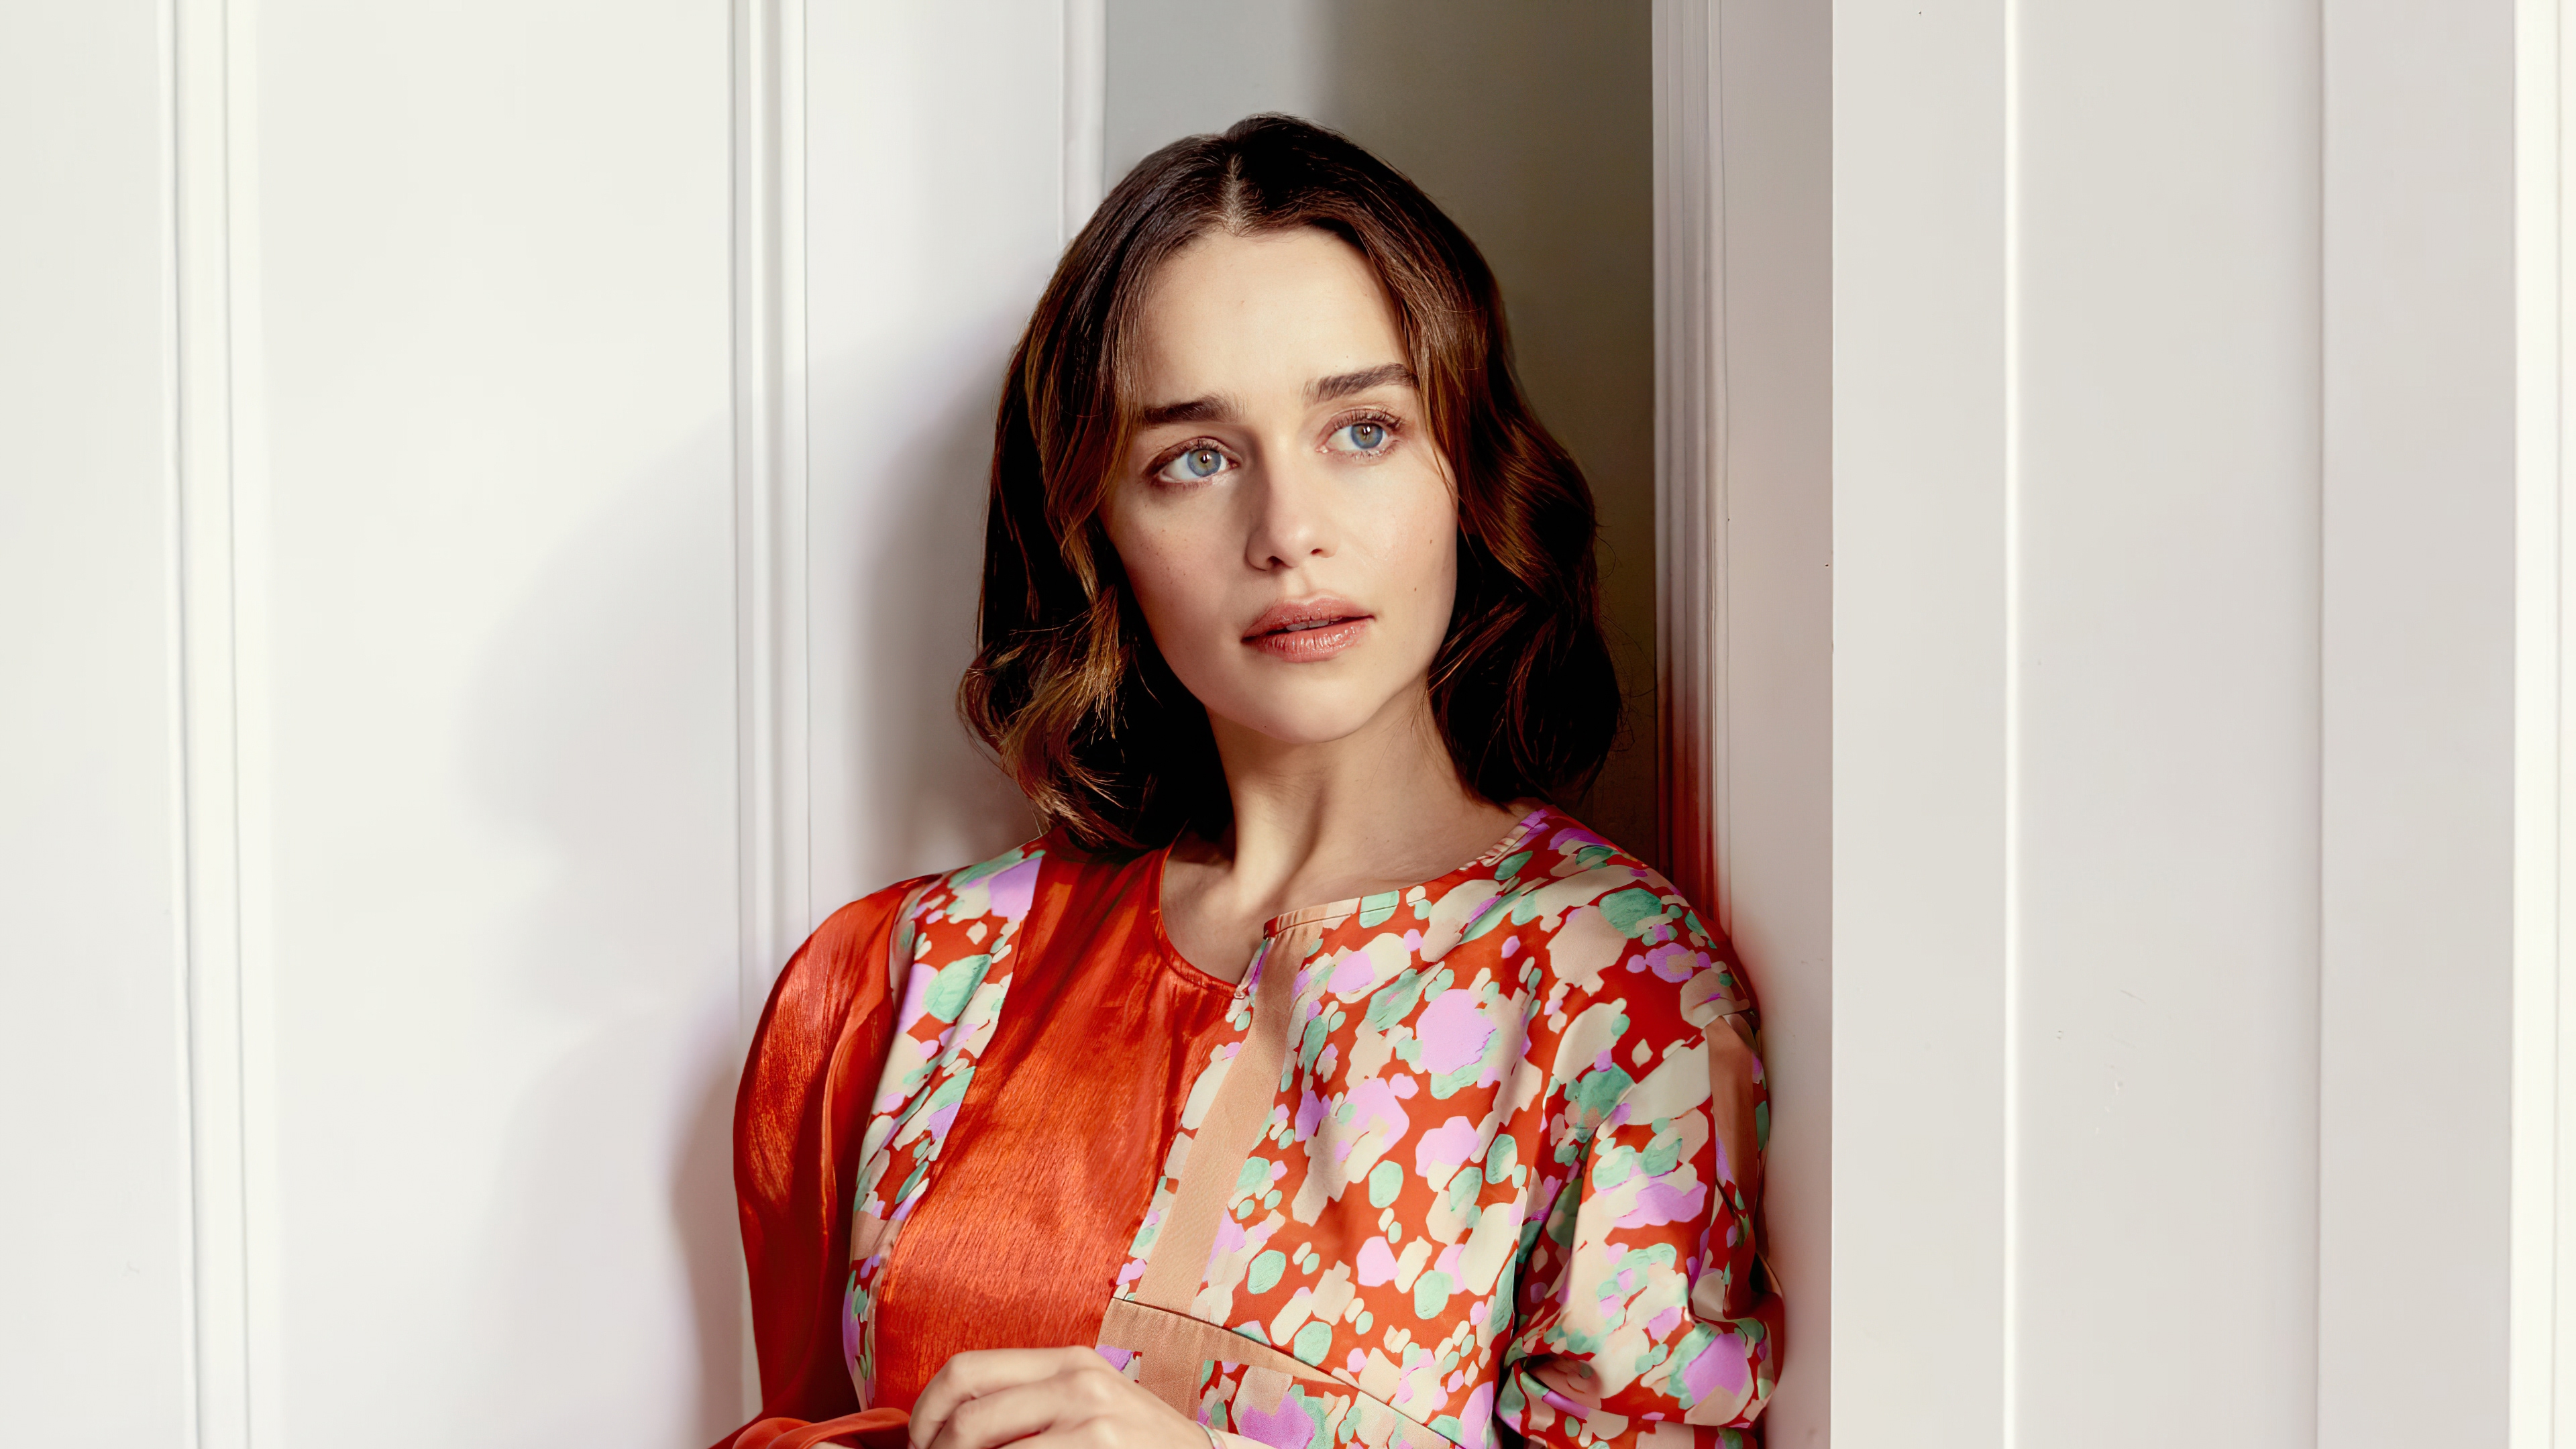 New Emilia Clarke 2020 Wallpapers